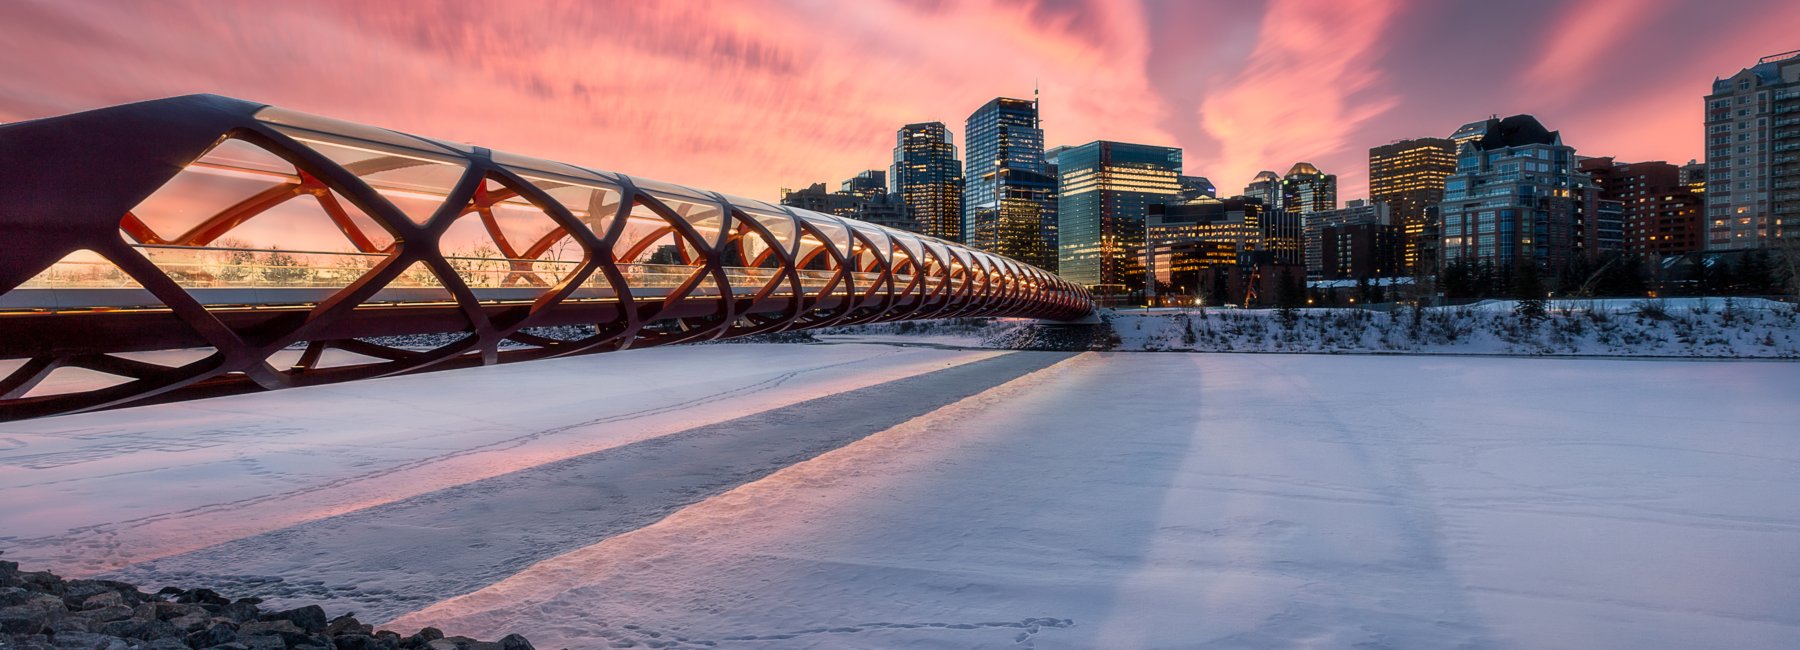 Winter sunrise/sunset scene of Peace Bridge in Calgary.